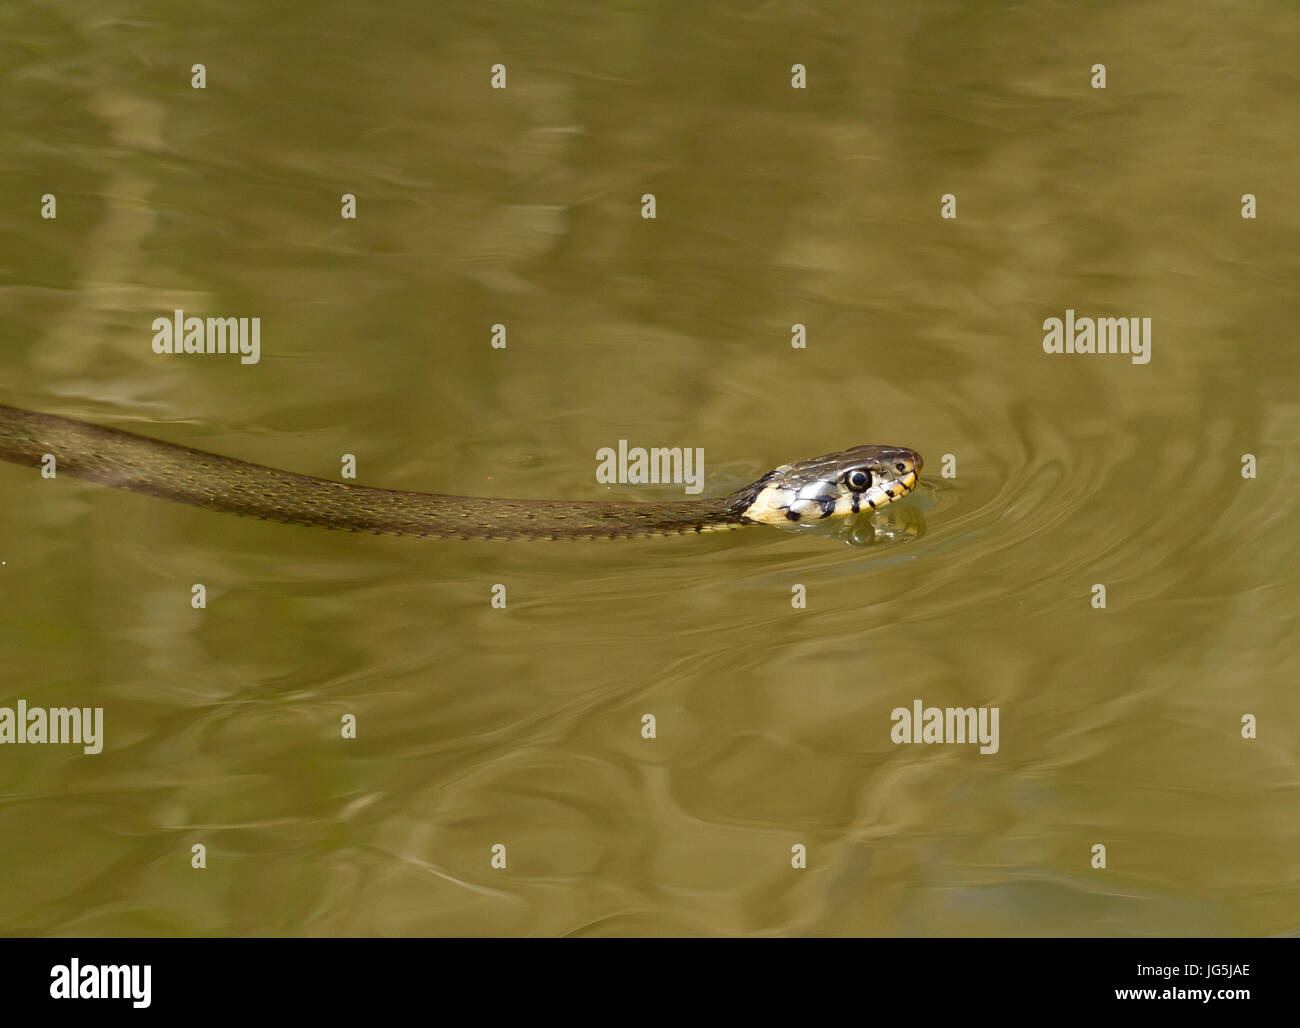 Swiming grass snake (Natrix natrix), Murnauer Moos, Murnau, Garmisch-Patenkirchen, Bavaria, Germany Stock Photo